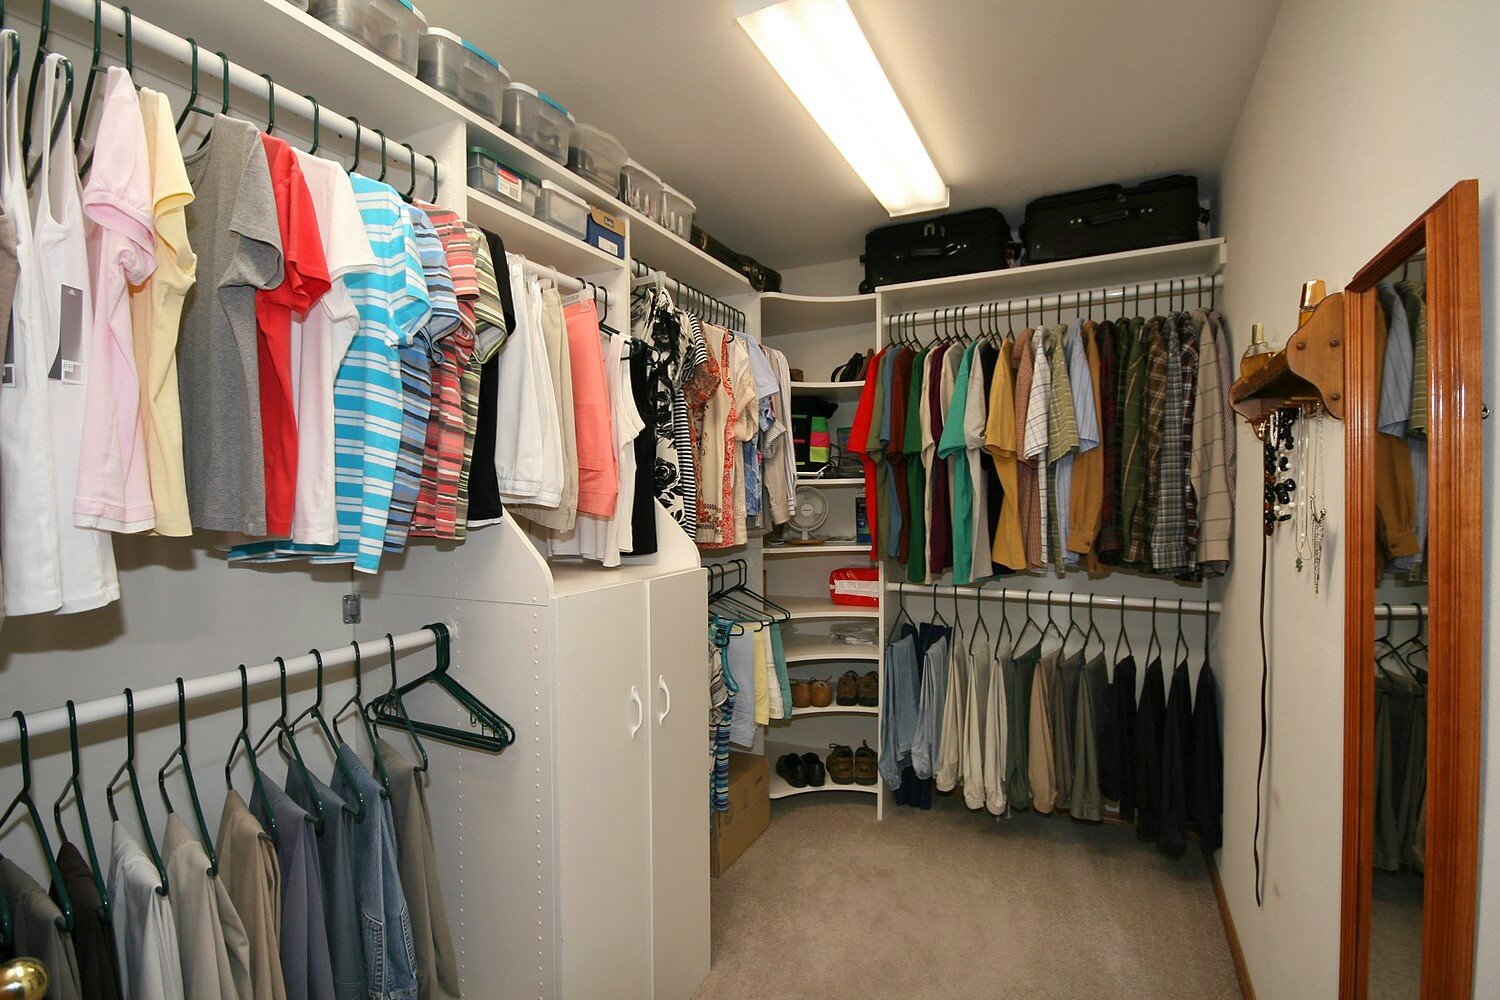 Inspiring Interior Storage Design Ideas with Diy Walk in Closet: Diy Walk In Closet | Build Closet Organizer | How To Build Your Own Closet Organizer